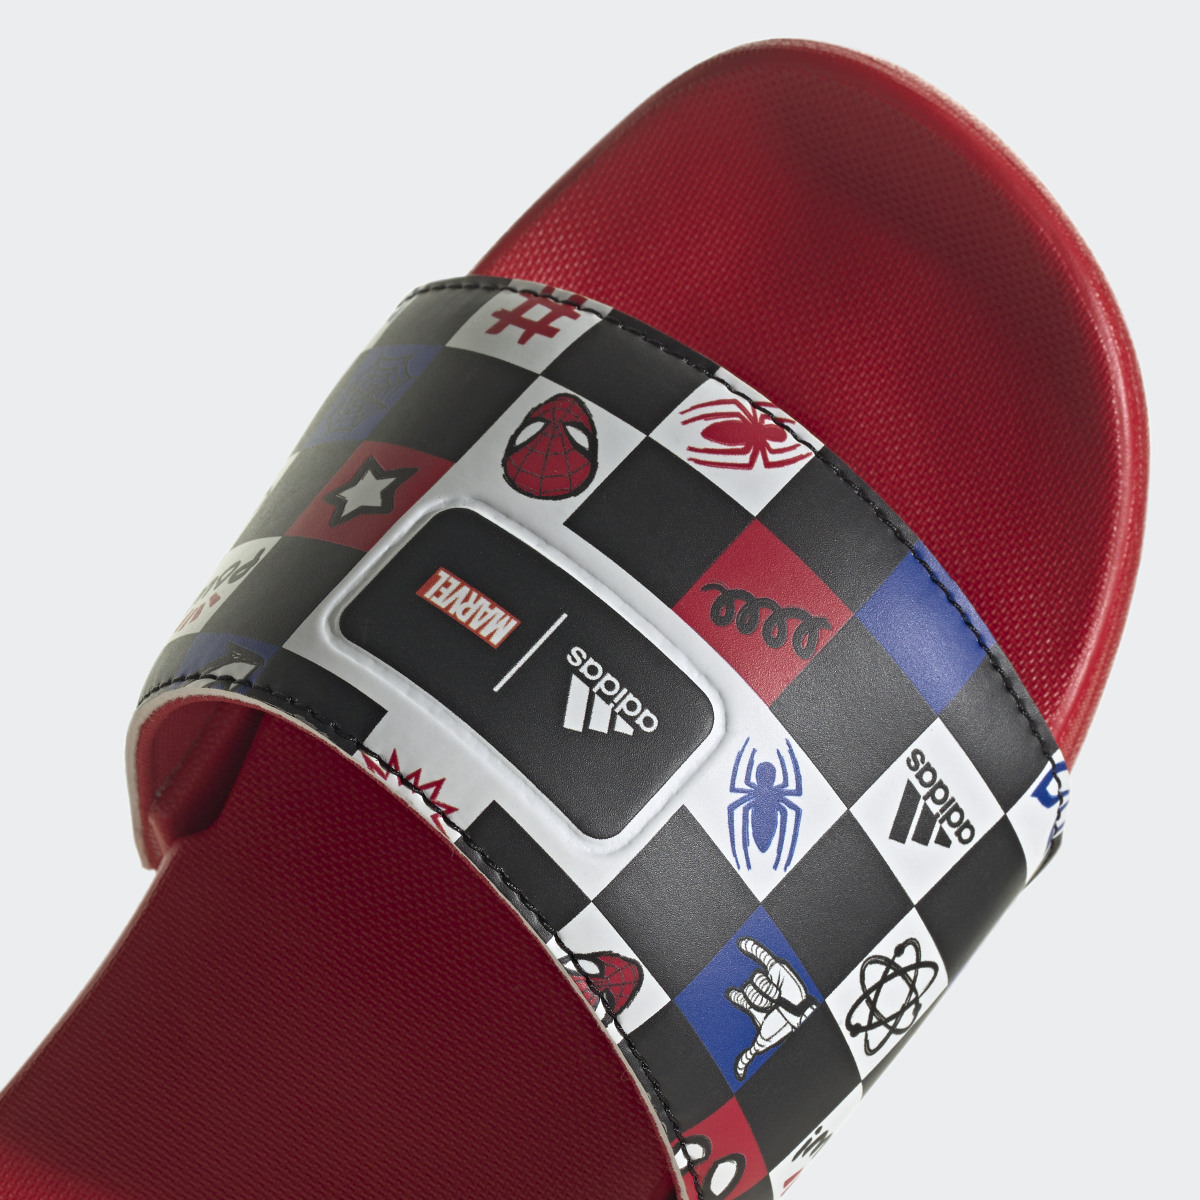 Adidas x Disney Adilette Comfort Spider-Man Slides. 9